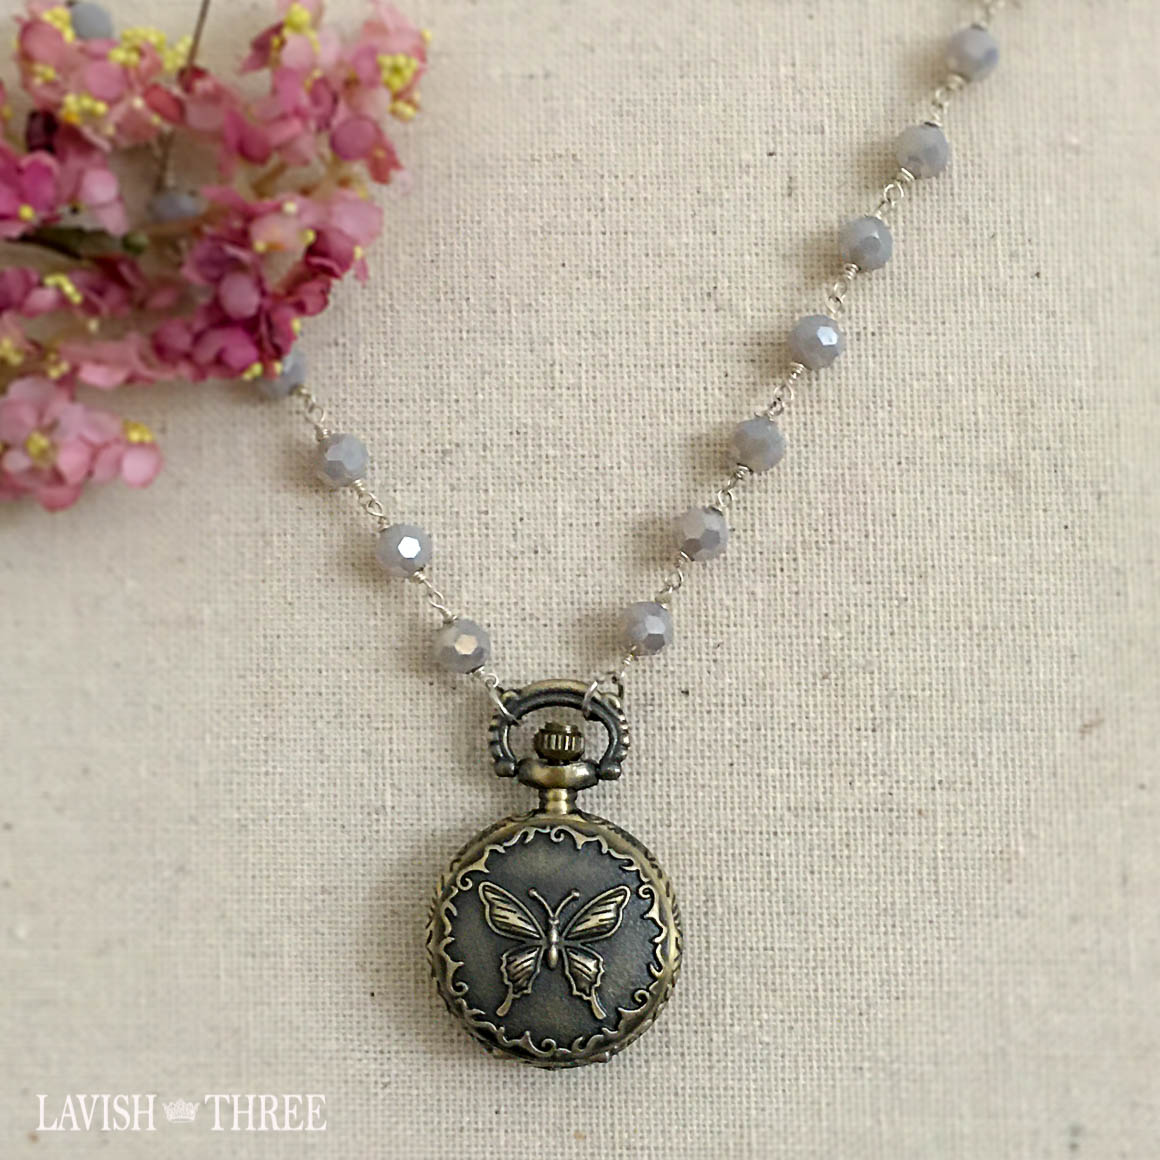 Butterfly watch pendant beaded necklace Lavish three 3